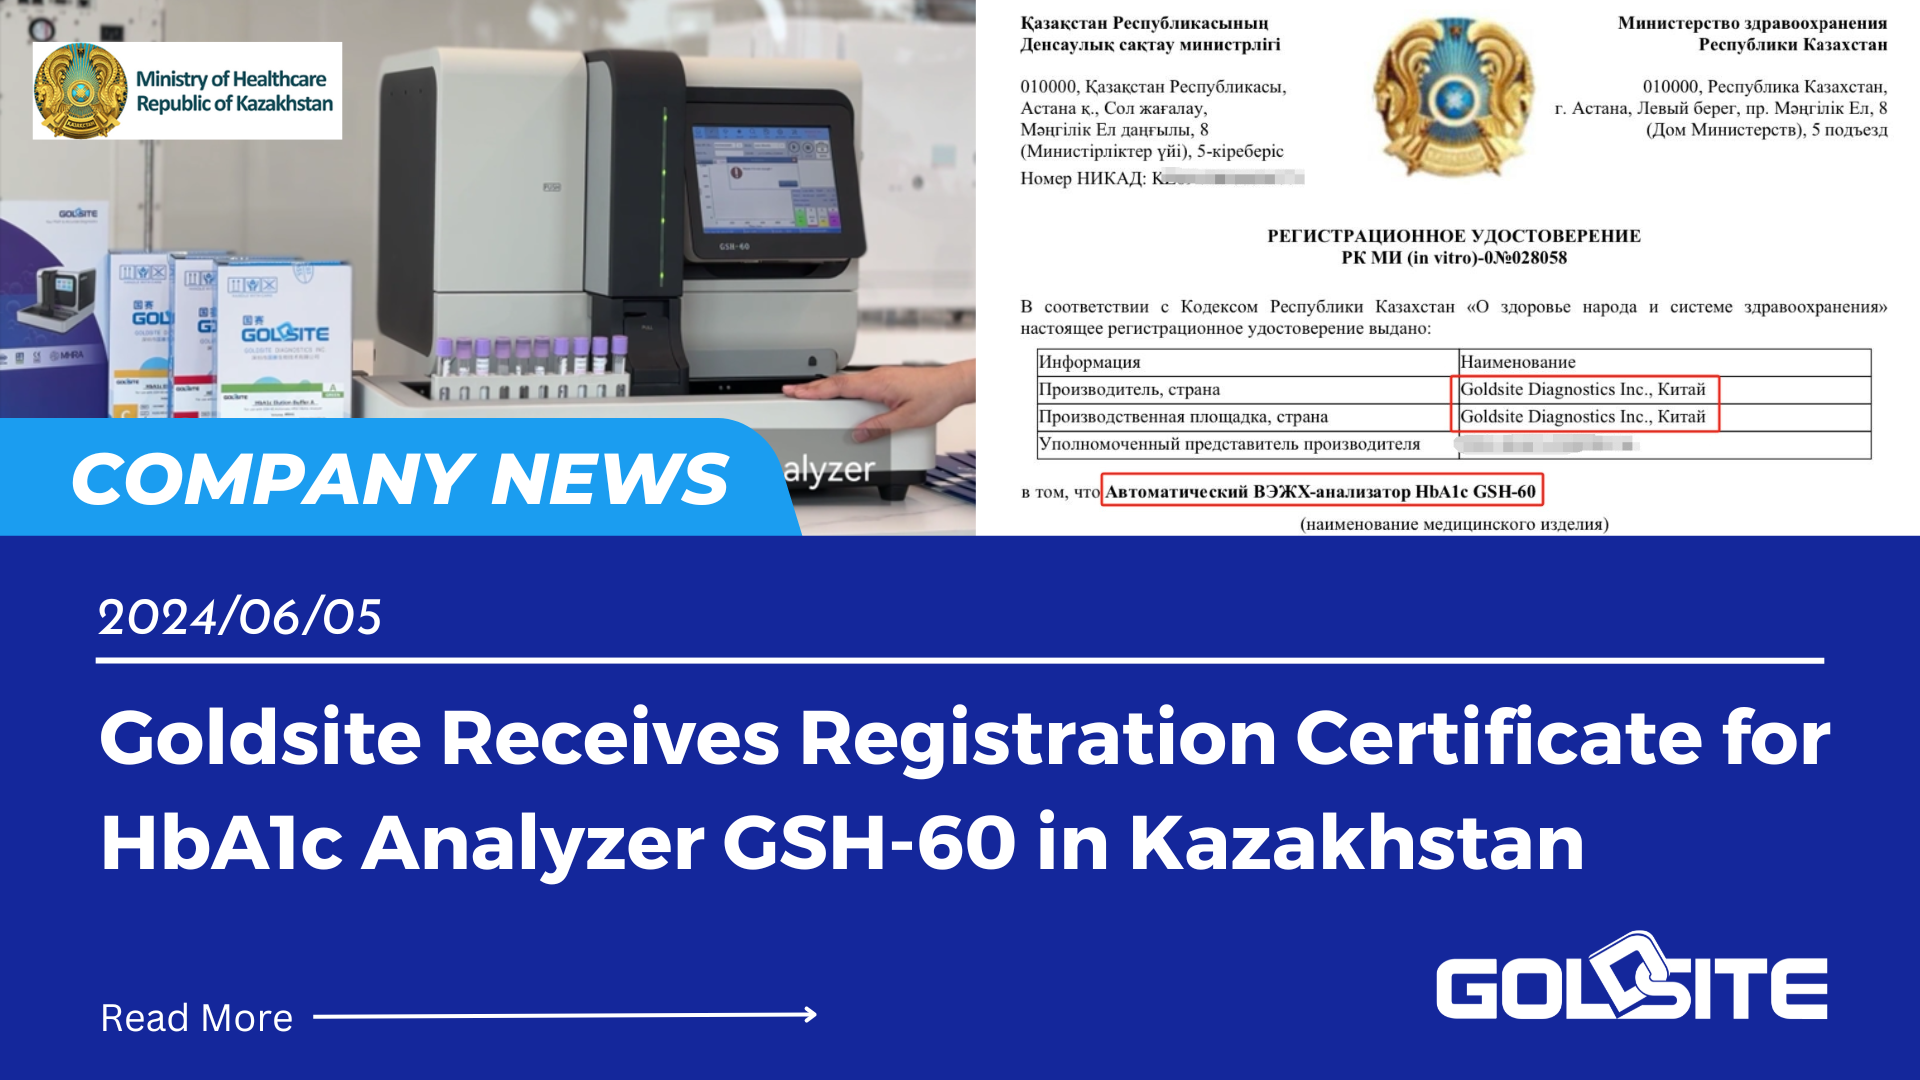 Goldsite Receives Registration Certificate for HbA1c Analyzer GSH-60 in Kazakhstan